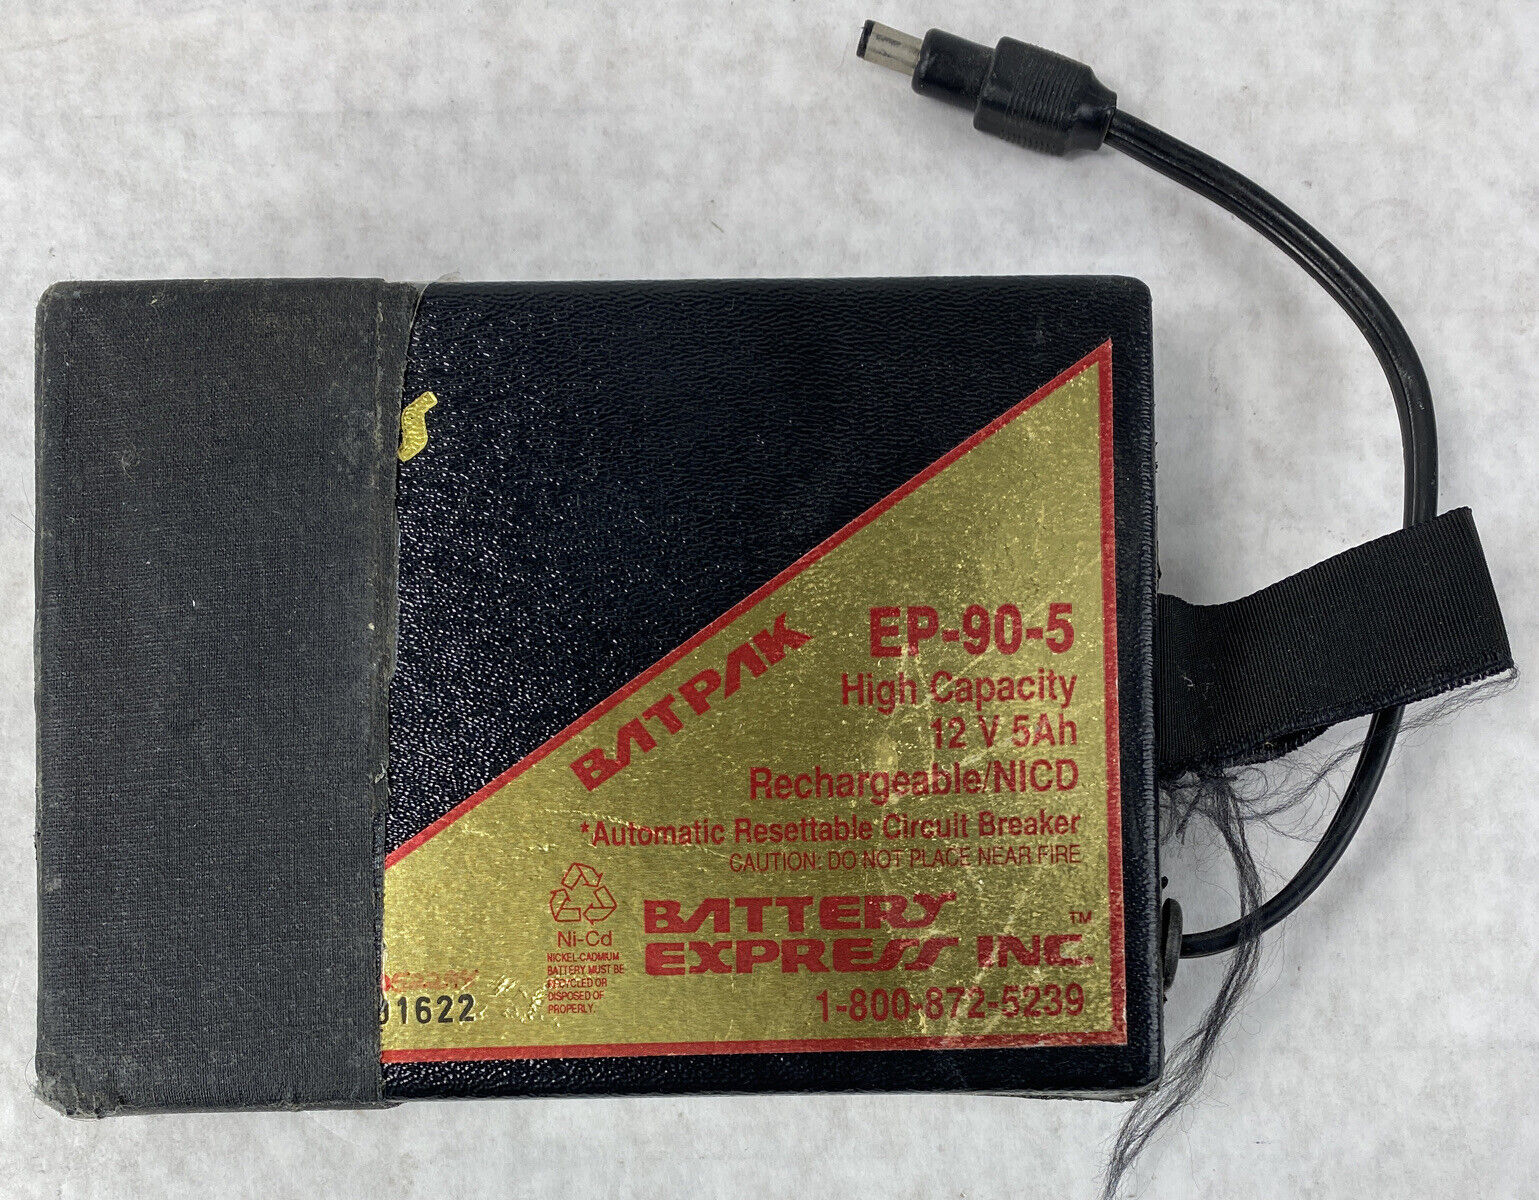 Battery Express Batpak EP-90-5 High Capacity 12V 5Ah Ni-CD Rechargeable Battery